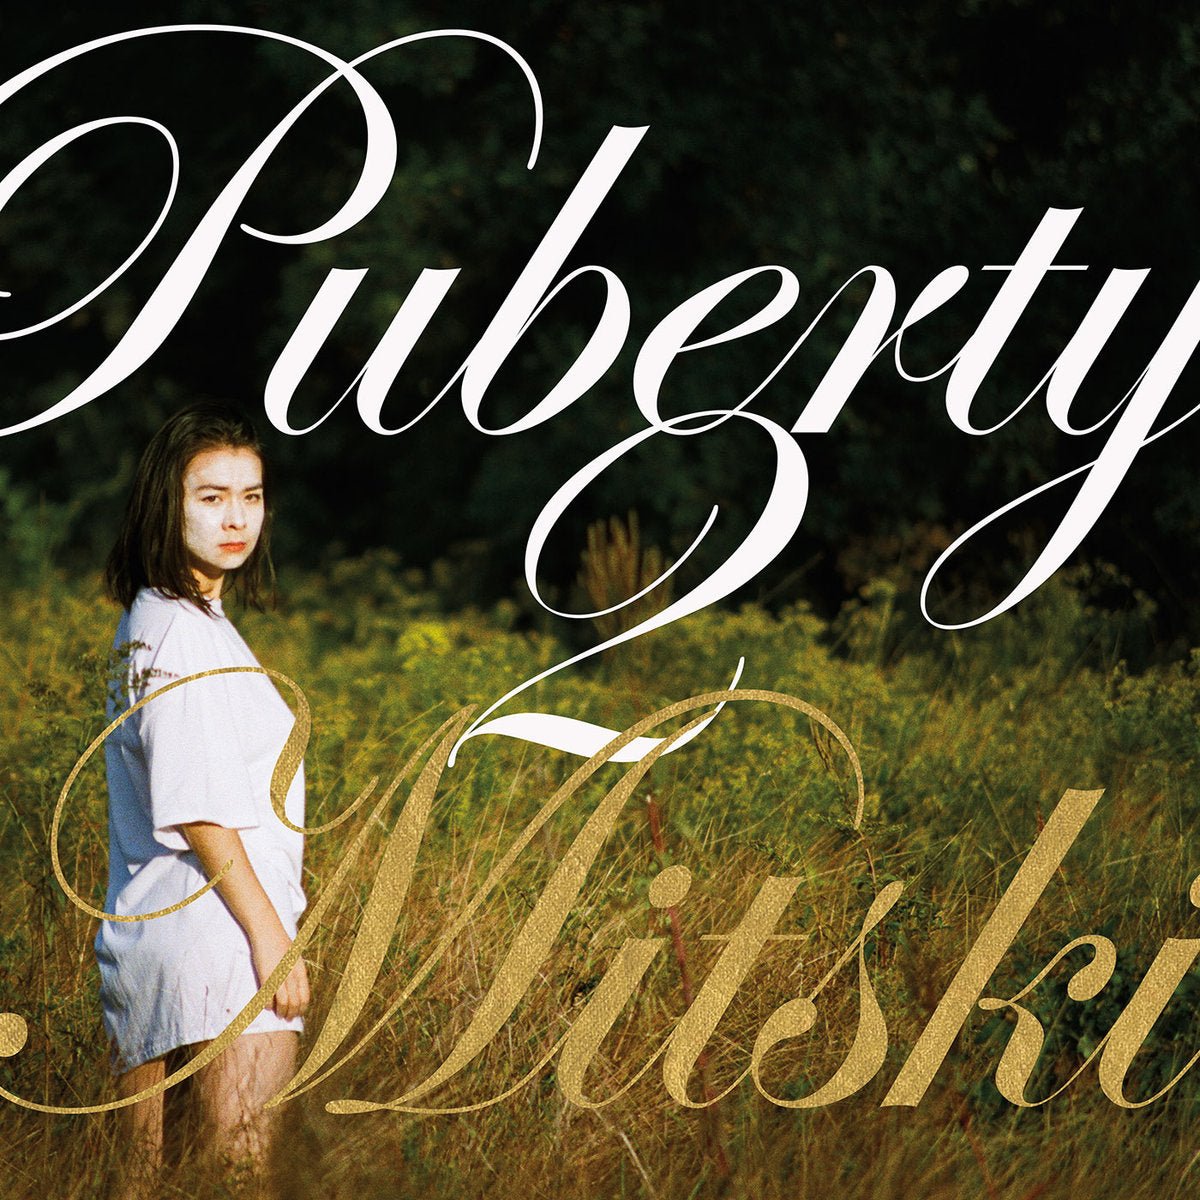 Mitski - Puberty 2 LP - Vinyl - Dead Oceans